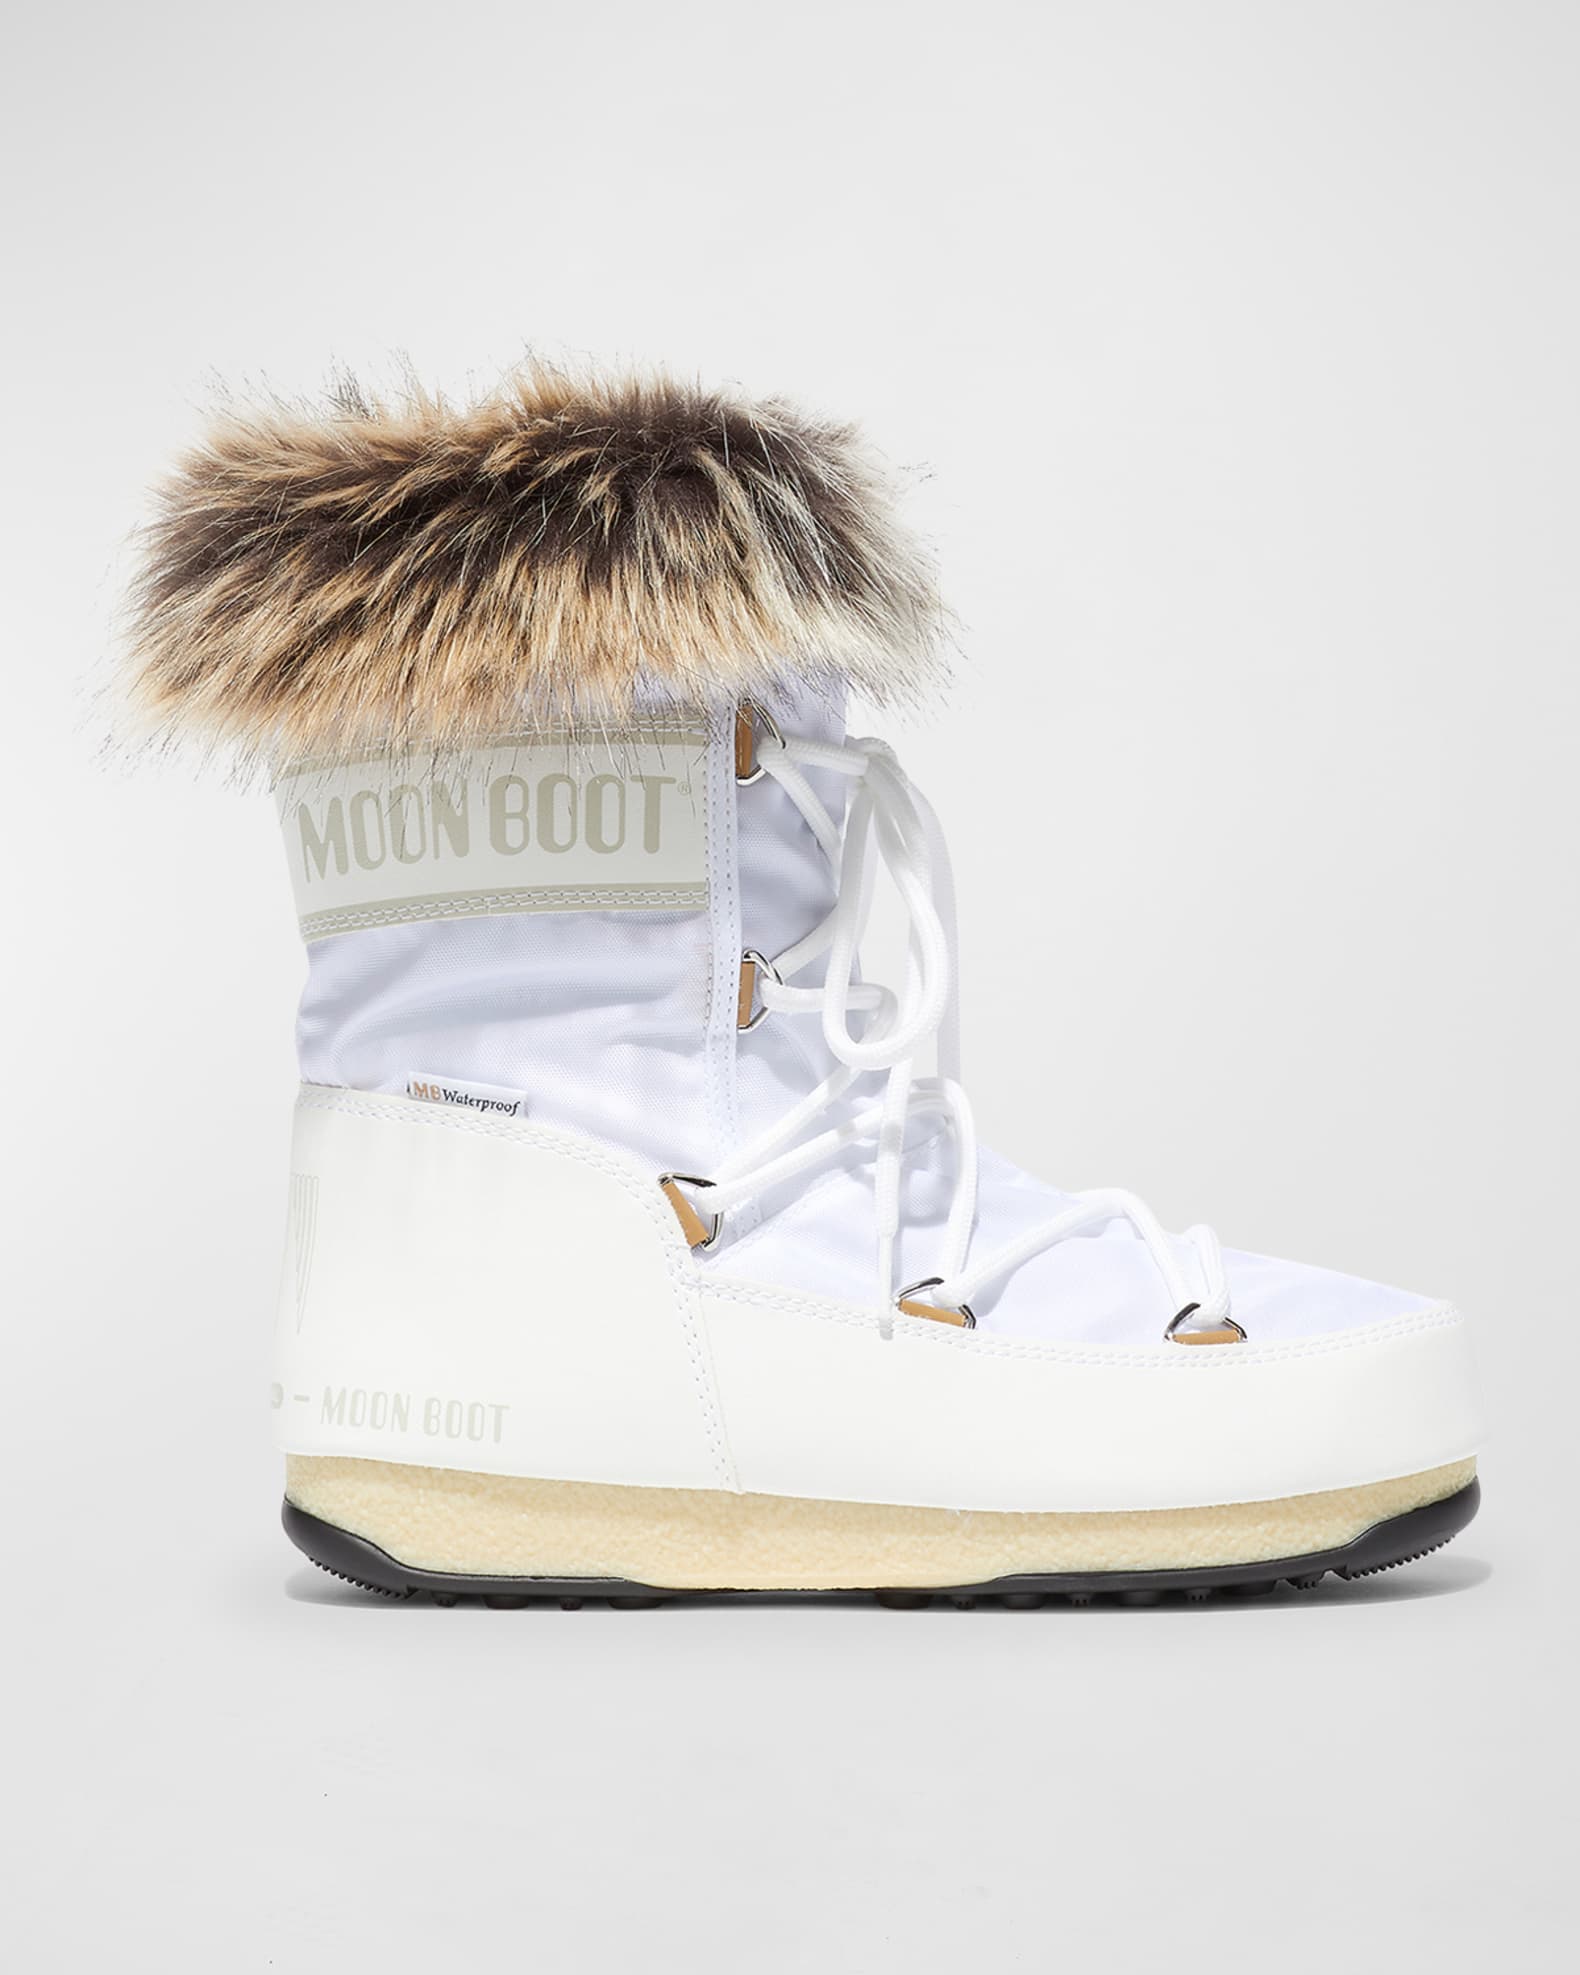 Louis Vuitton Rabbit Fur Winter Boots